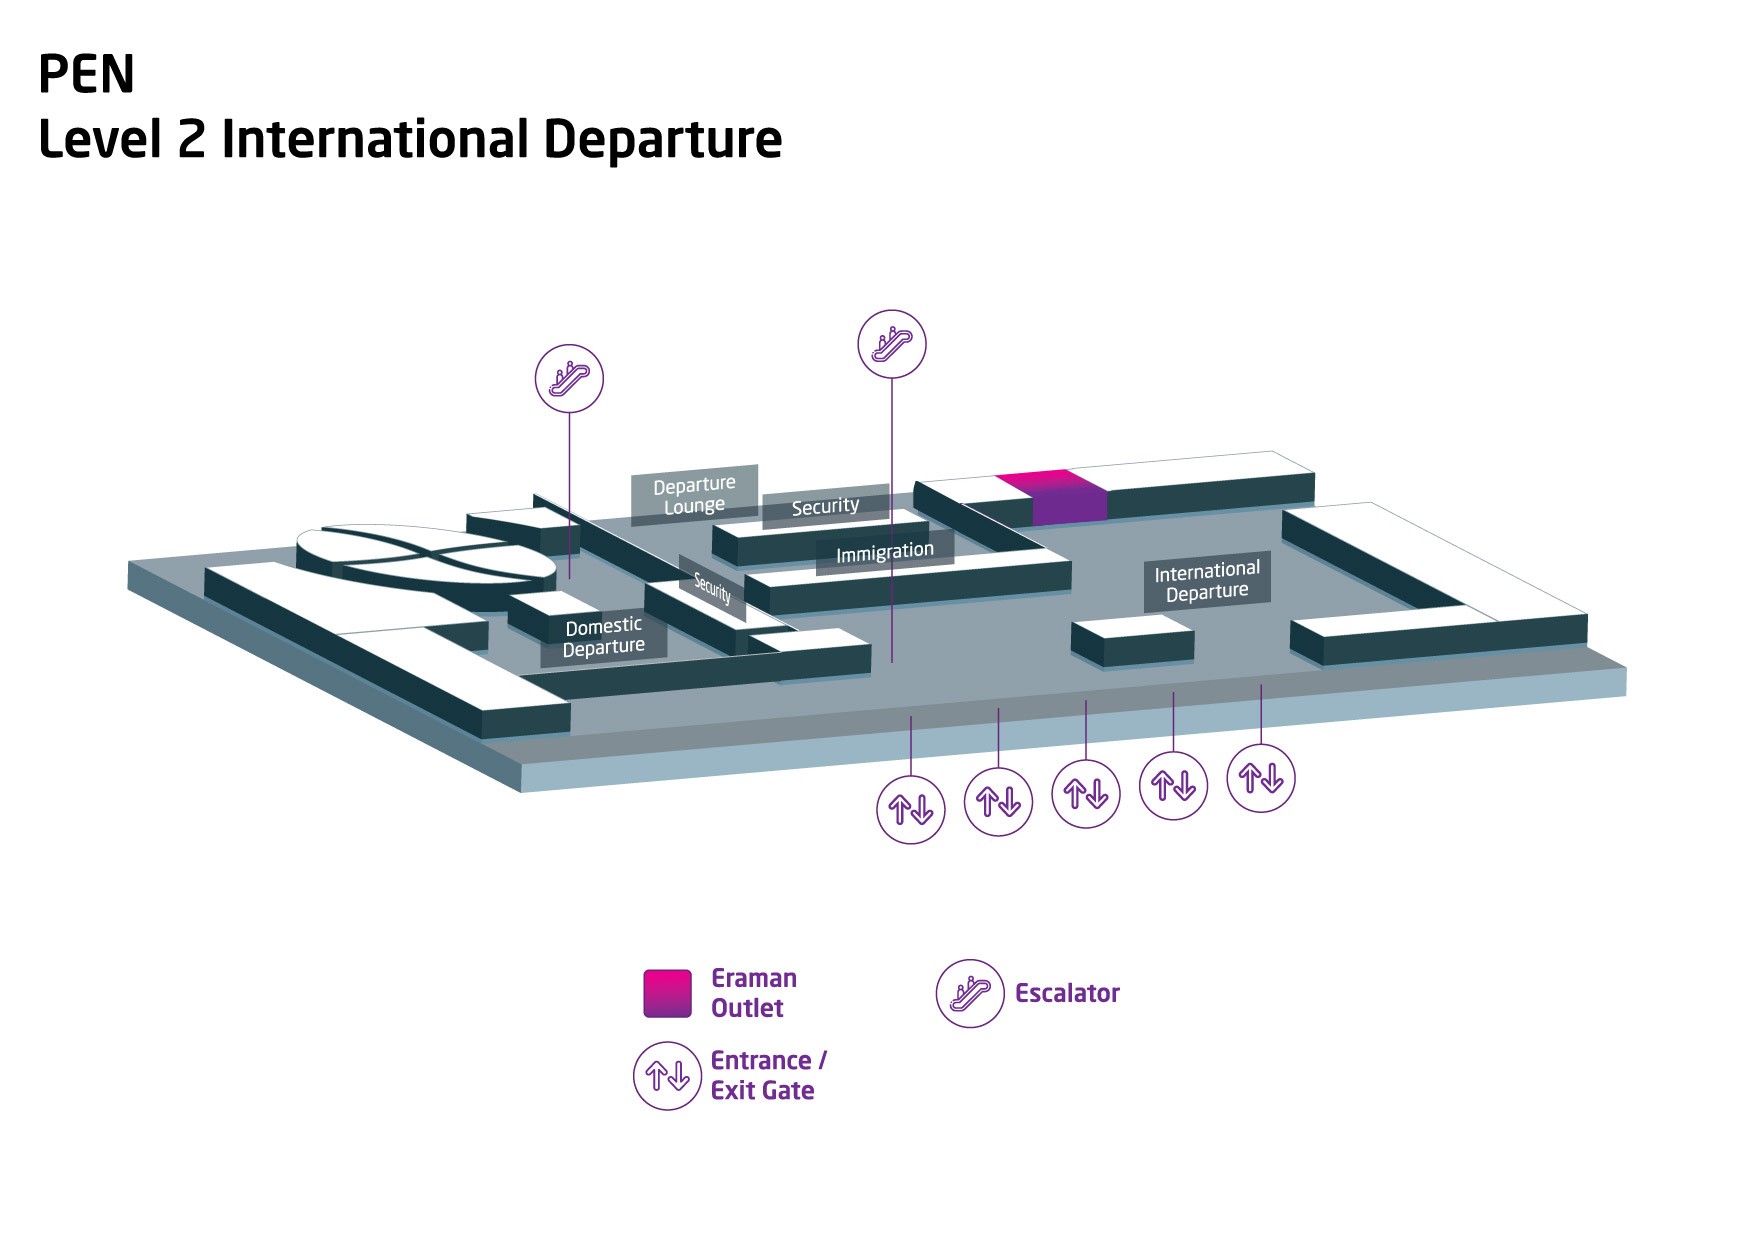 Penang International Airport Level 2 International Departure